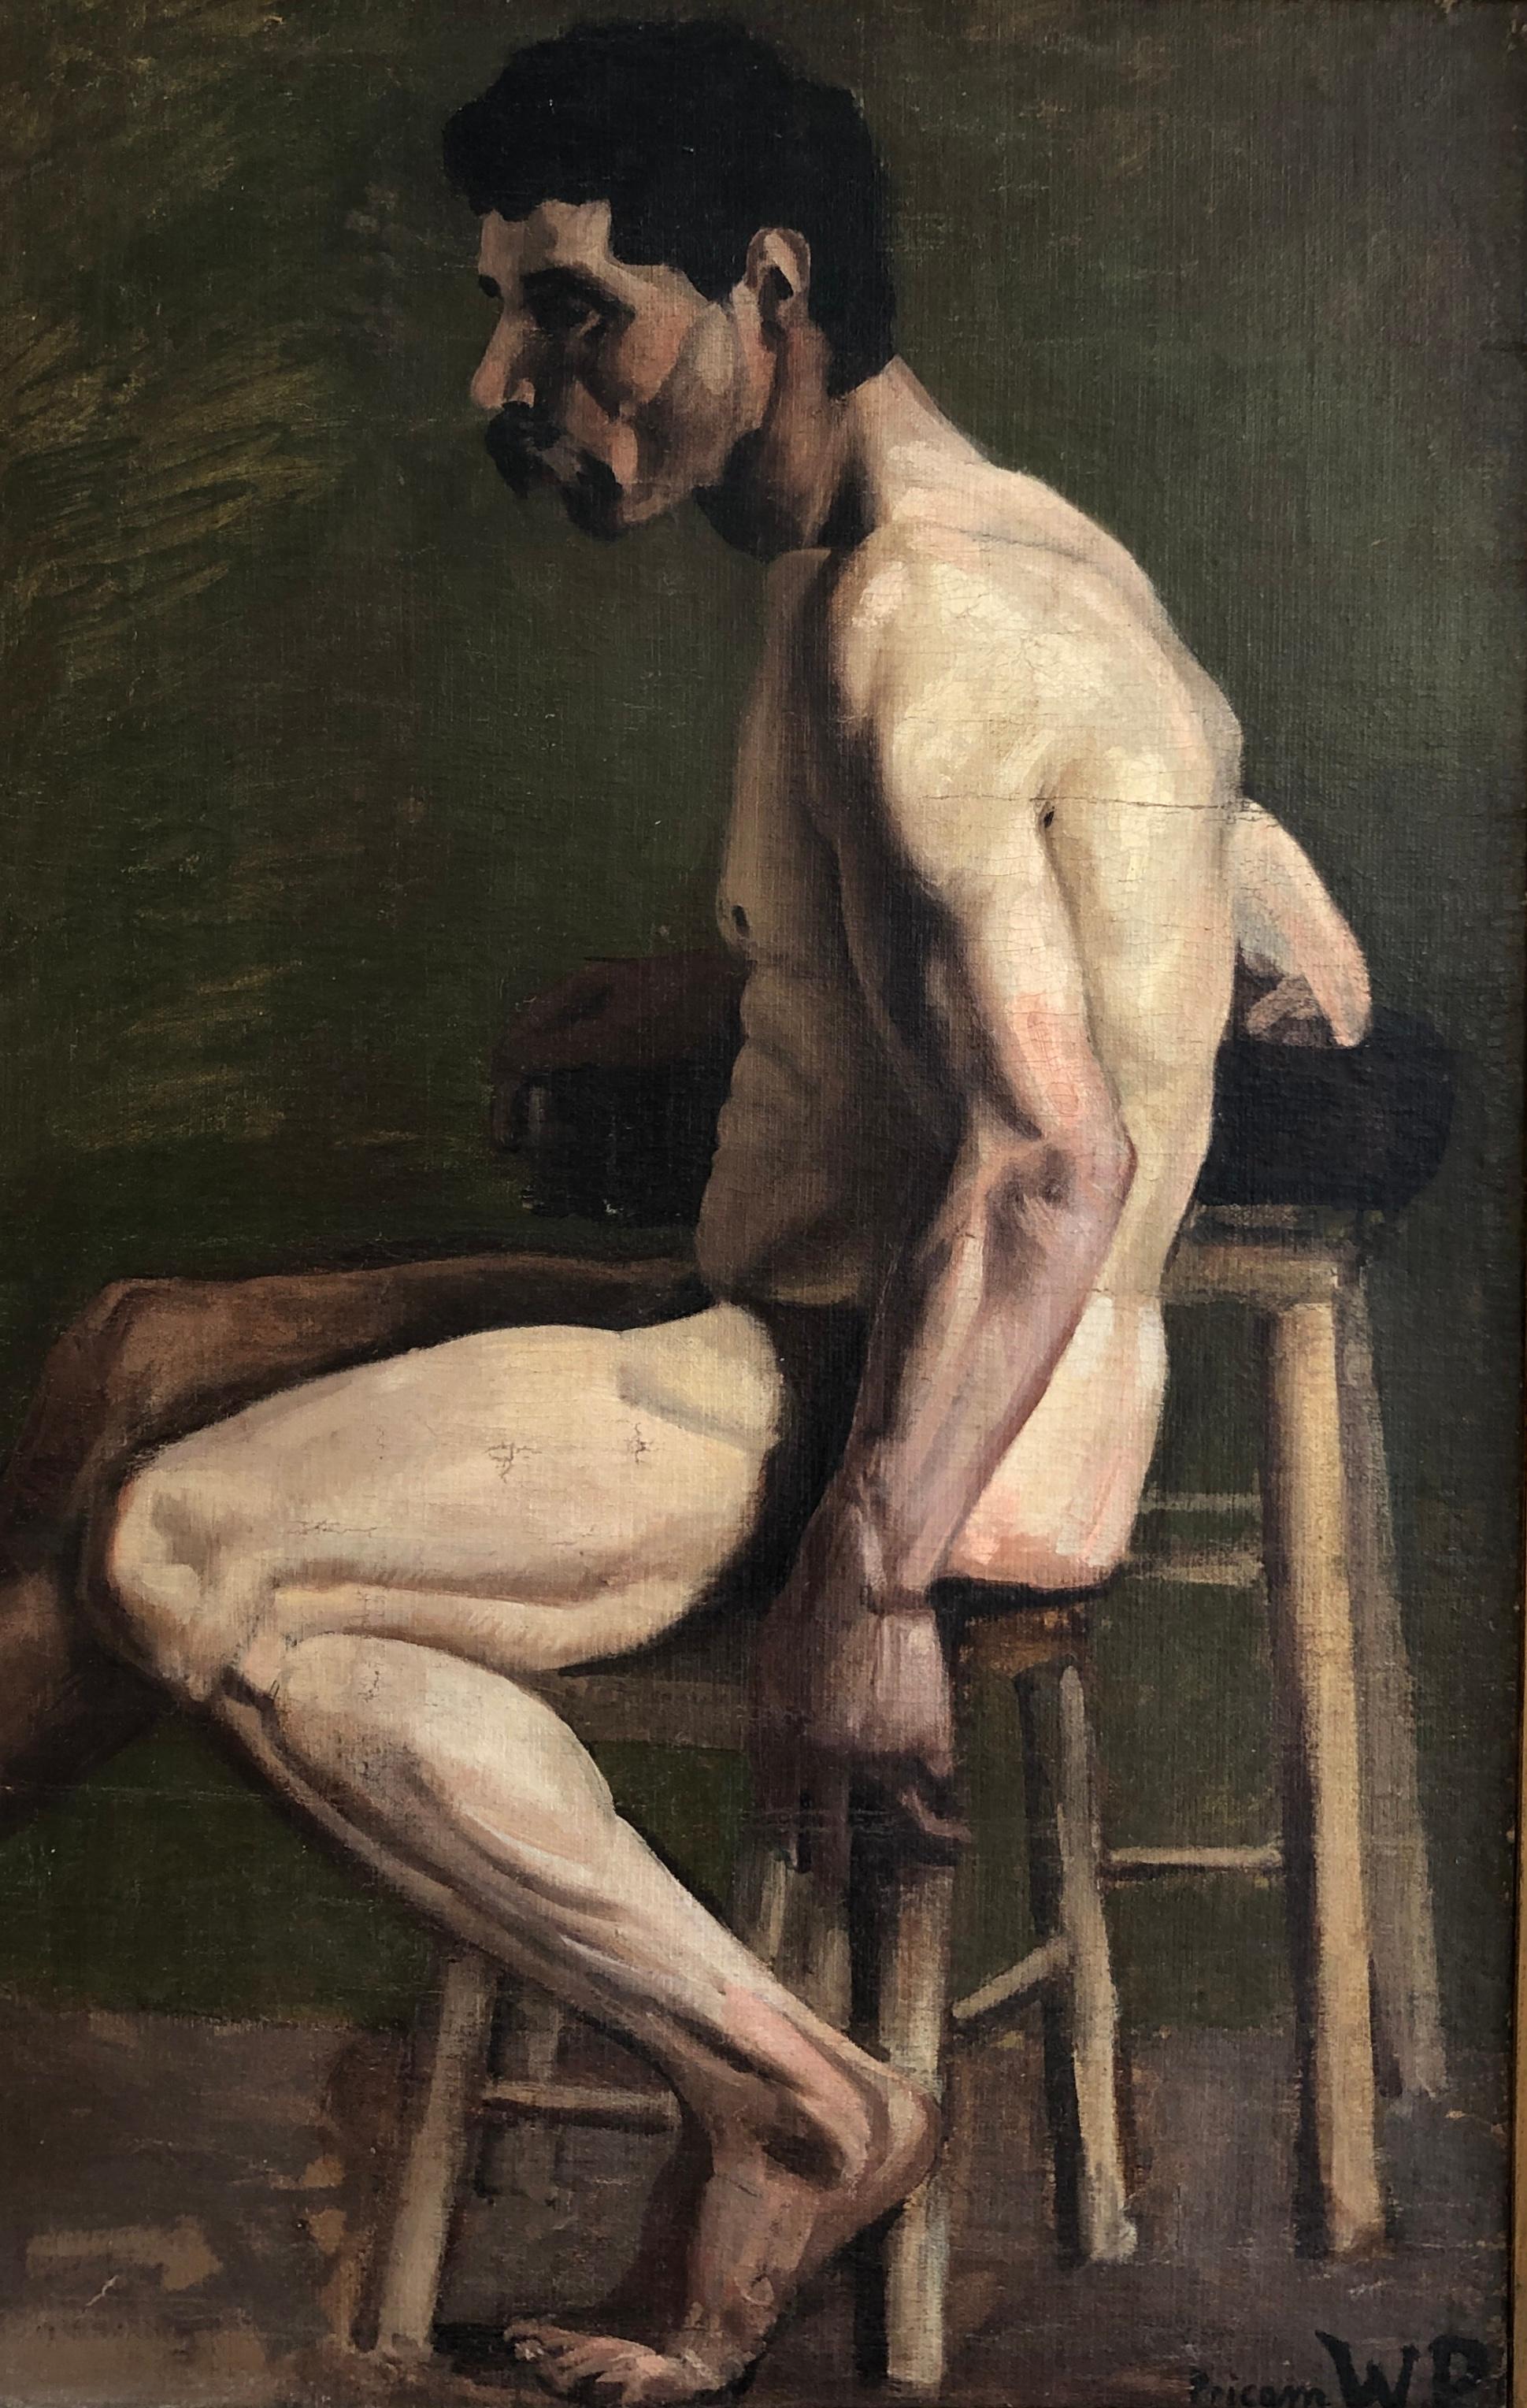 W.P. Nude Painting - Naked man posing seated